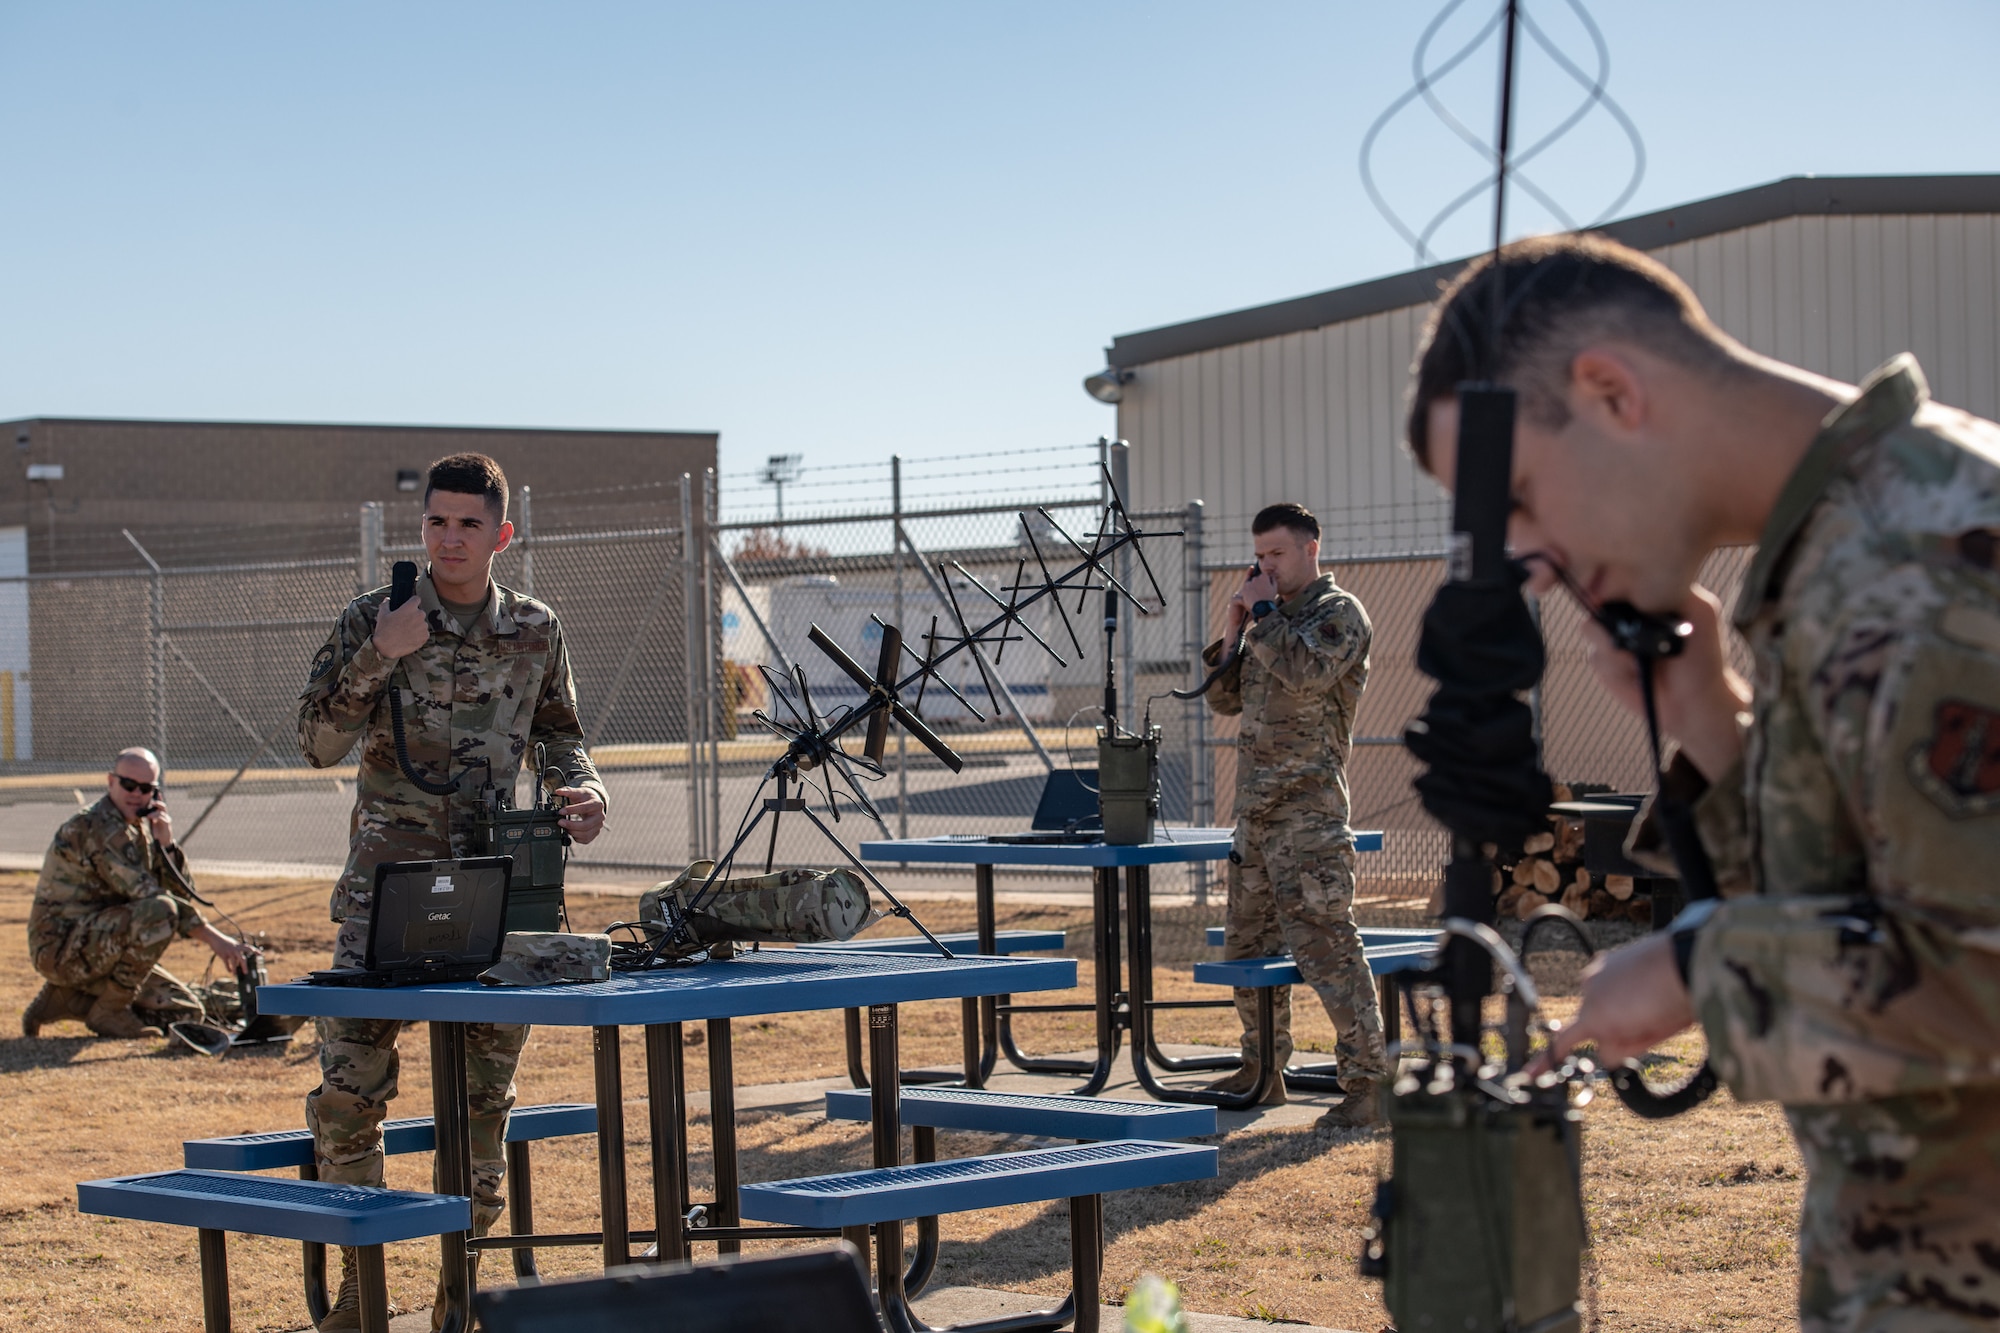 group of Airmen talk into radios